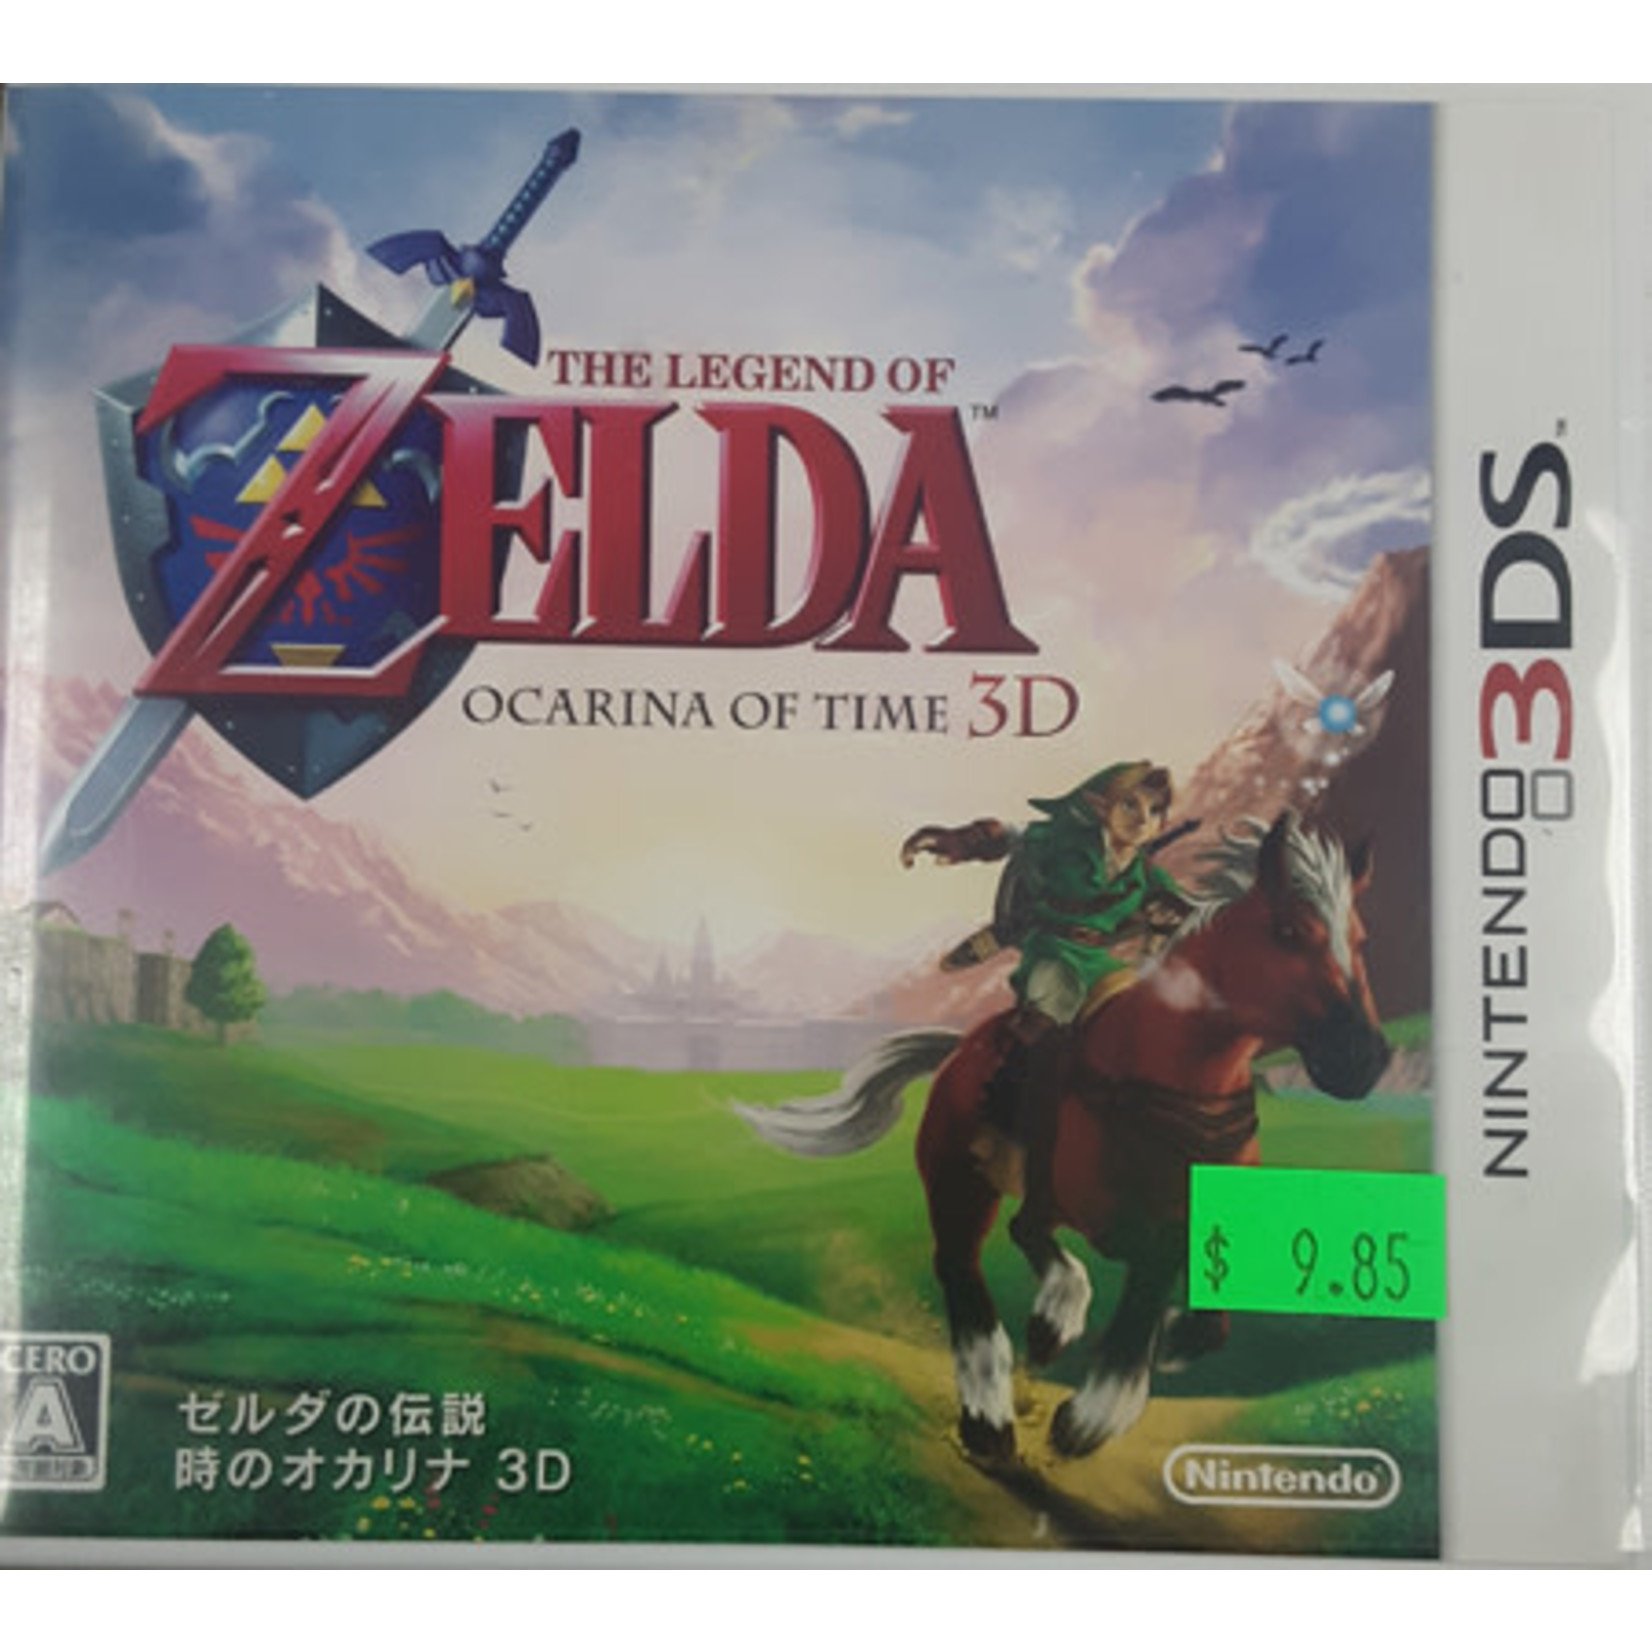 IMPORT-3DSU-The Legend of Zelda Ocarina of Time 3D